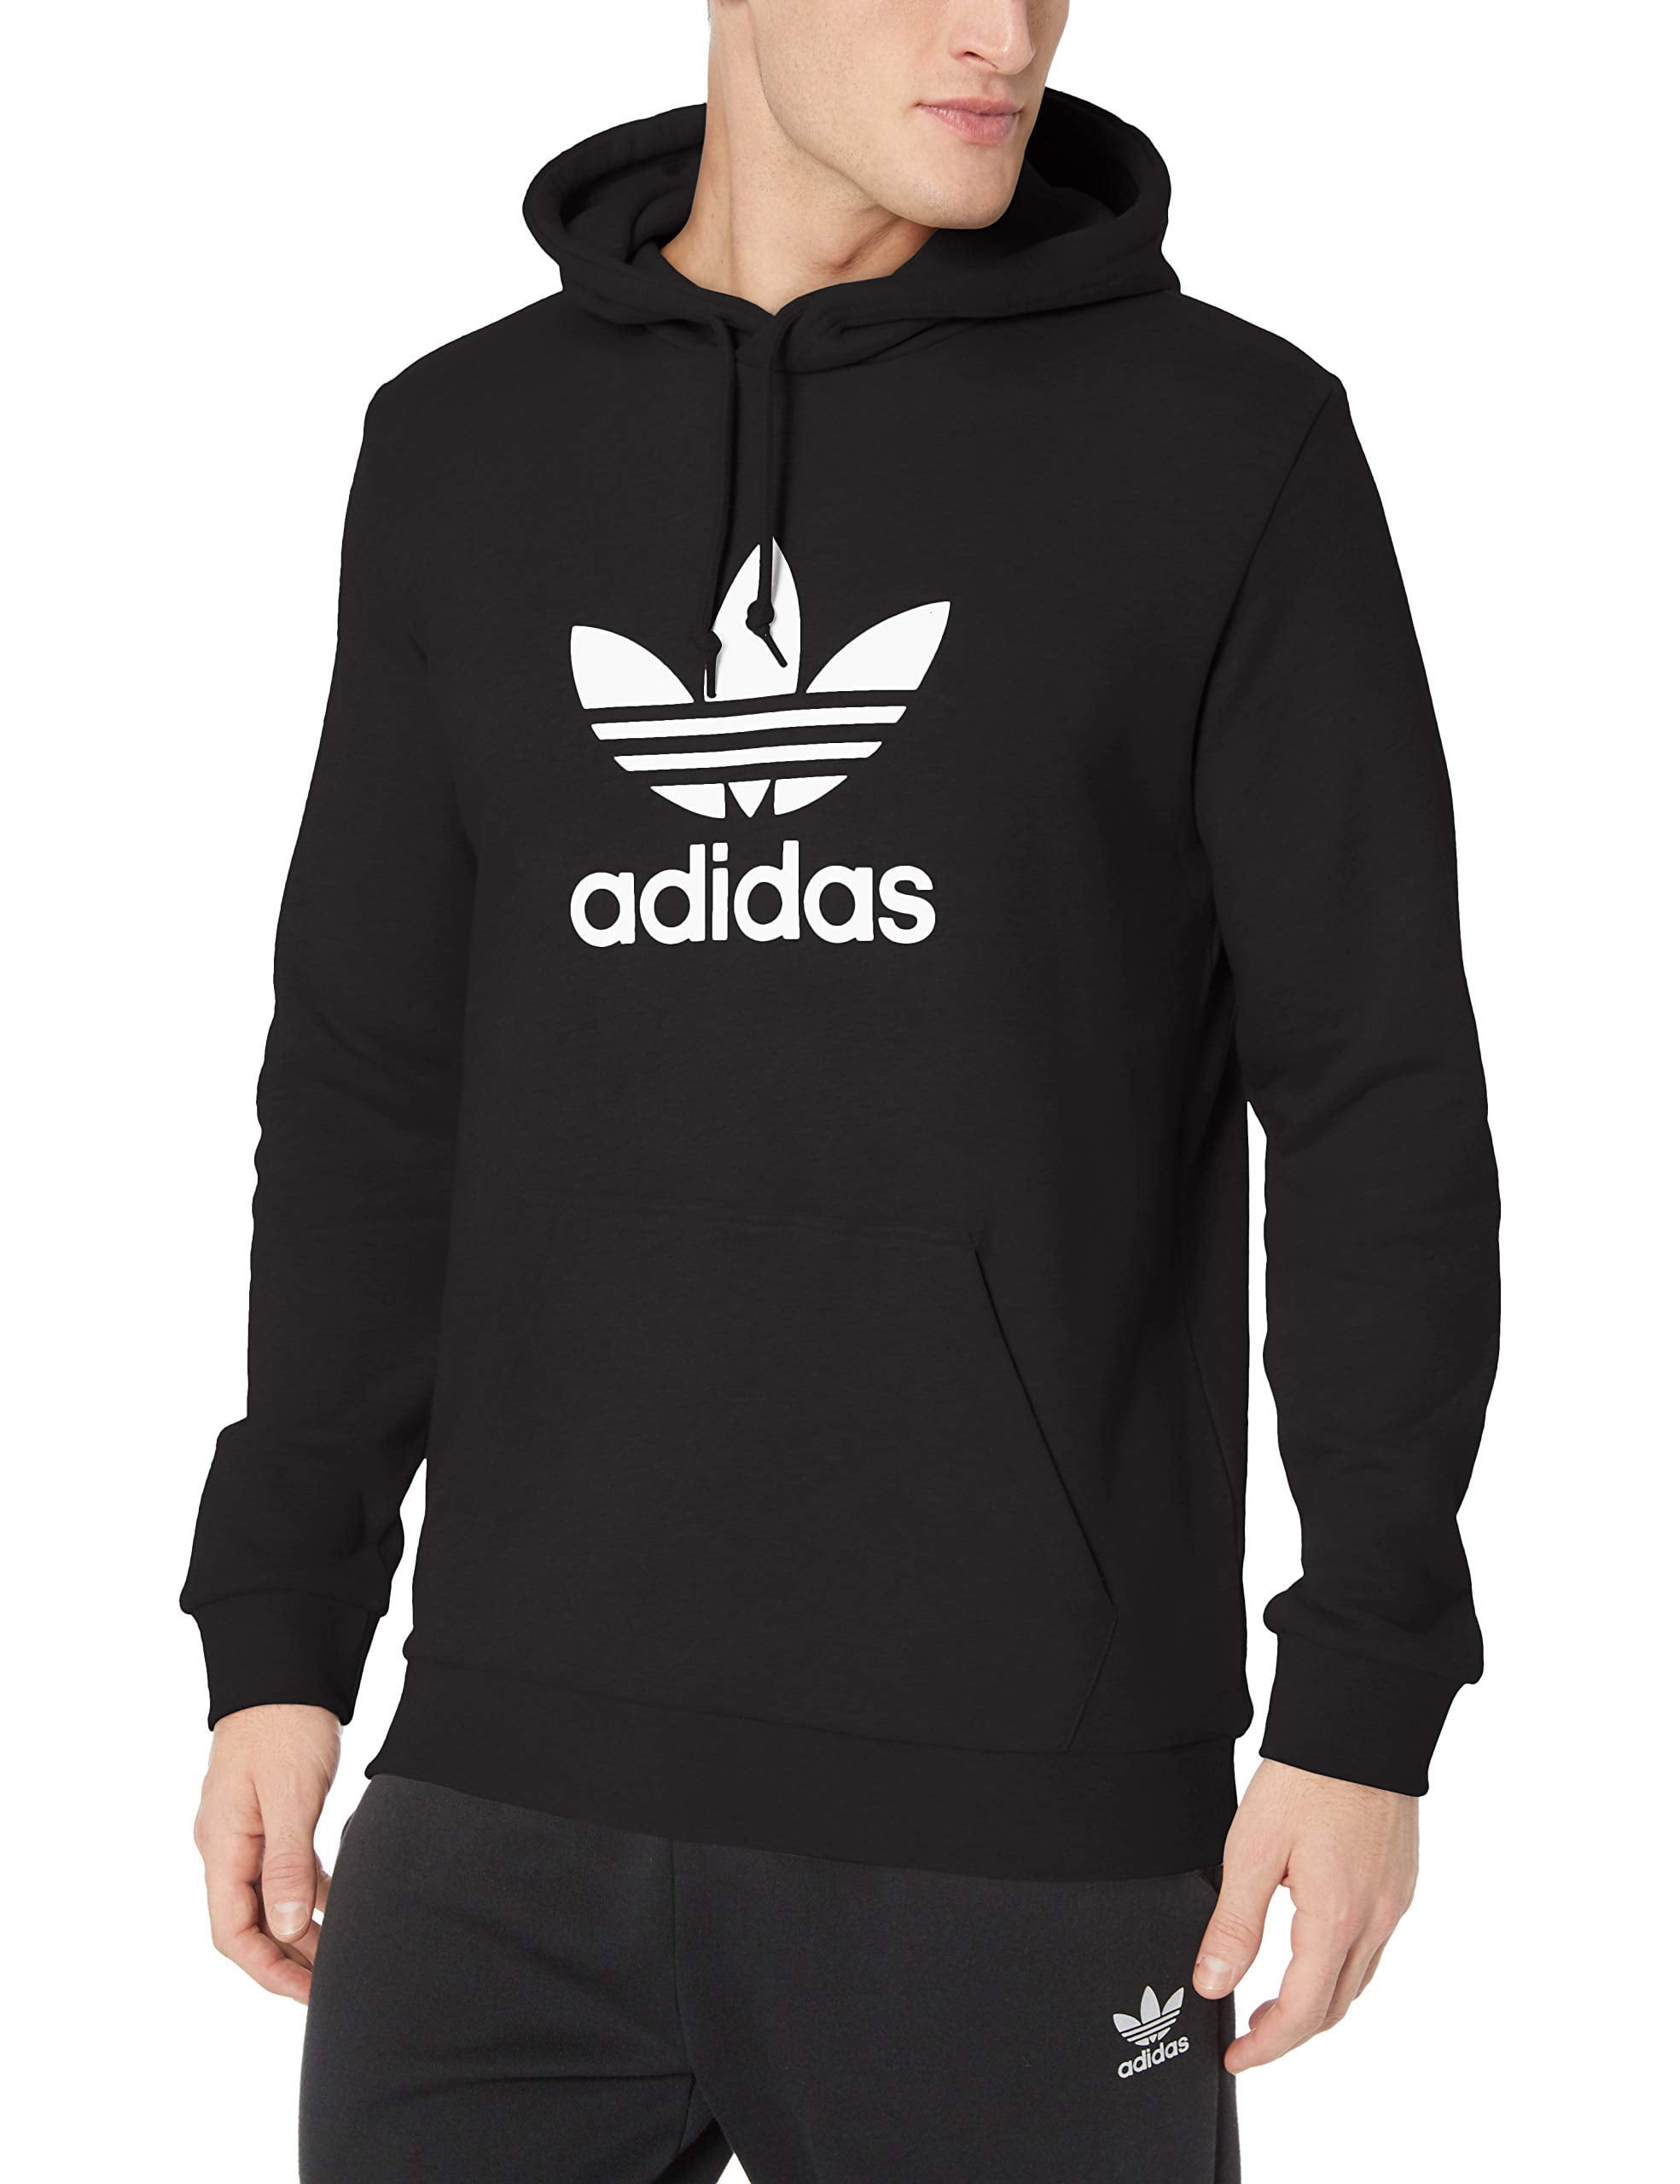 Adidas - Mens White Sweater Medium Hooded Graphic Print M - Walmart.com ...